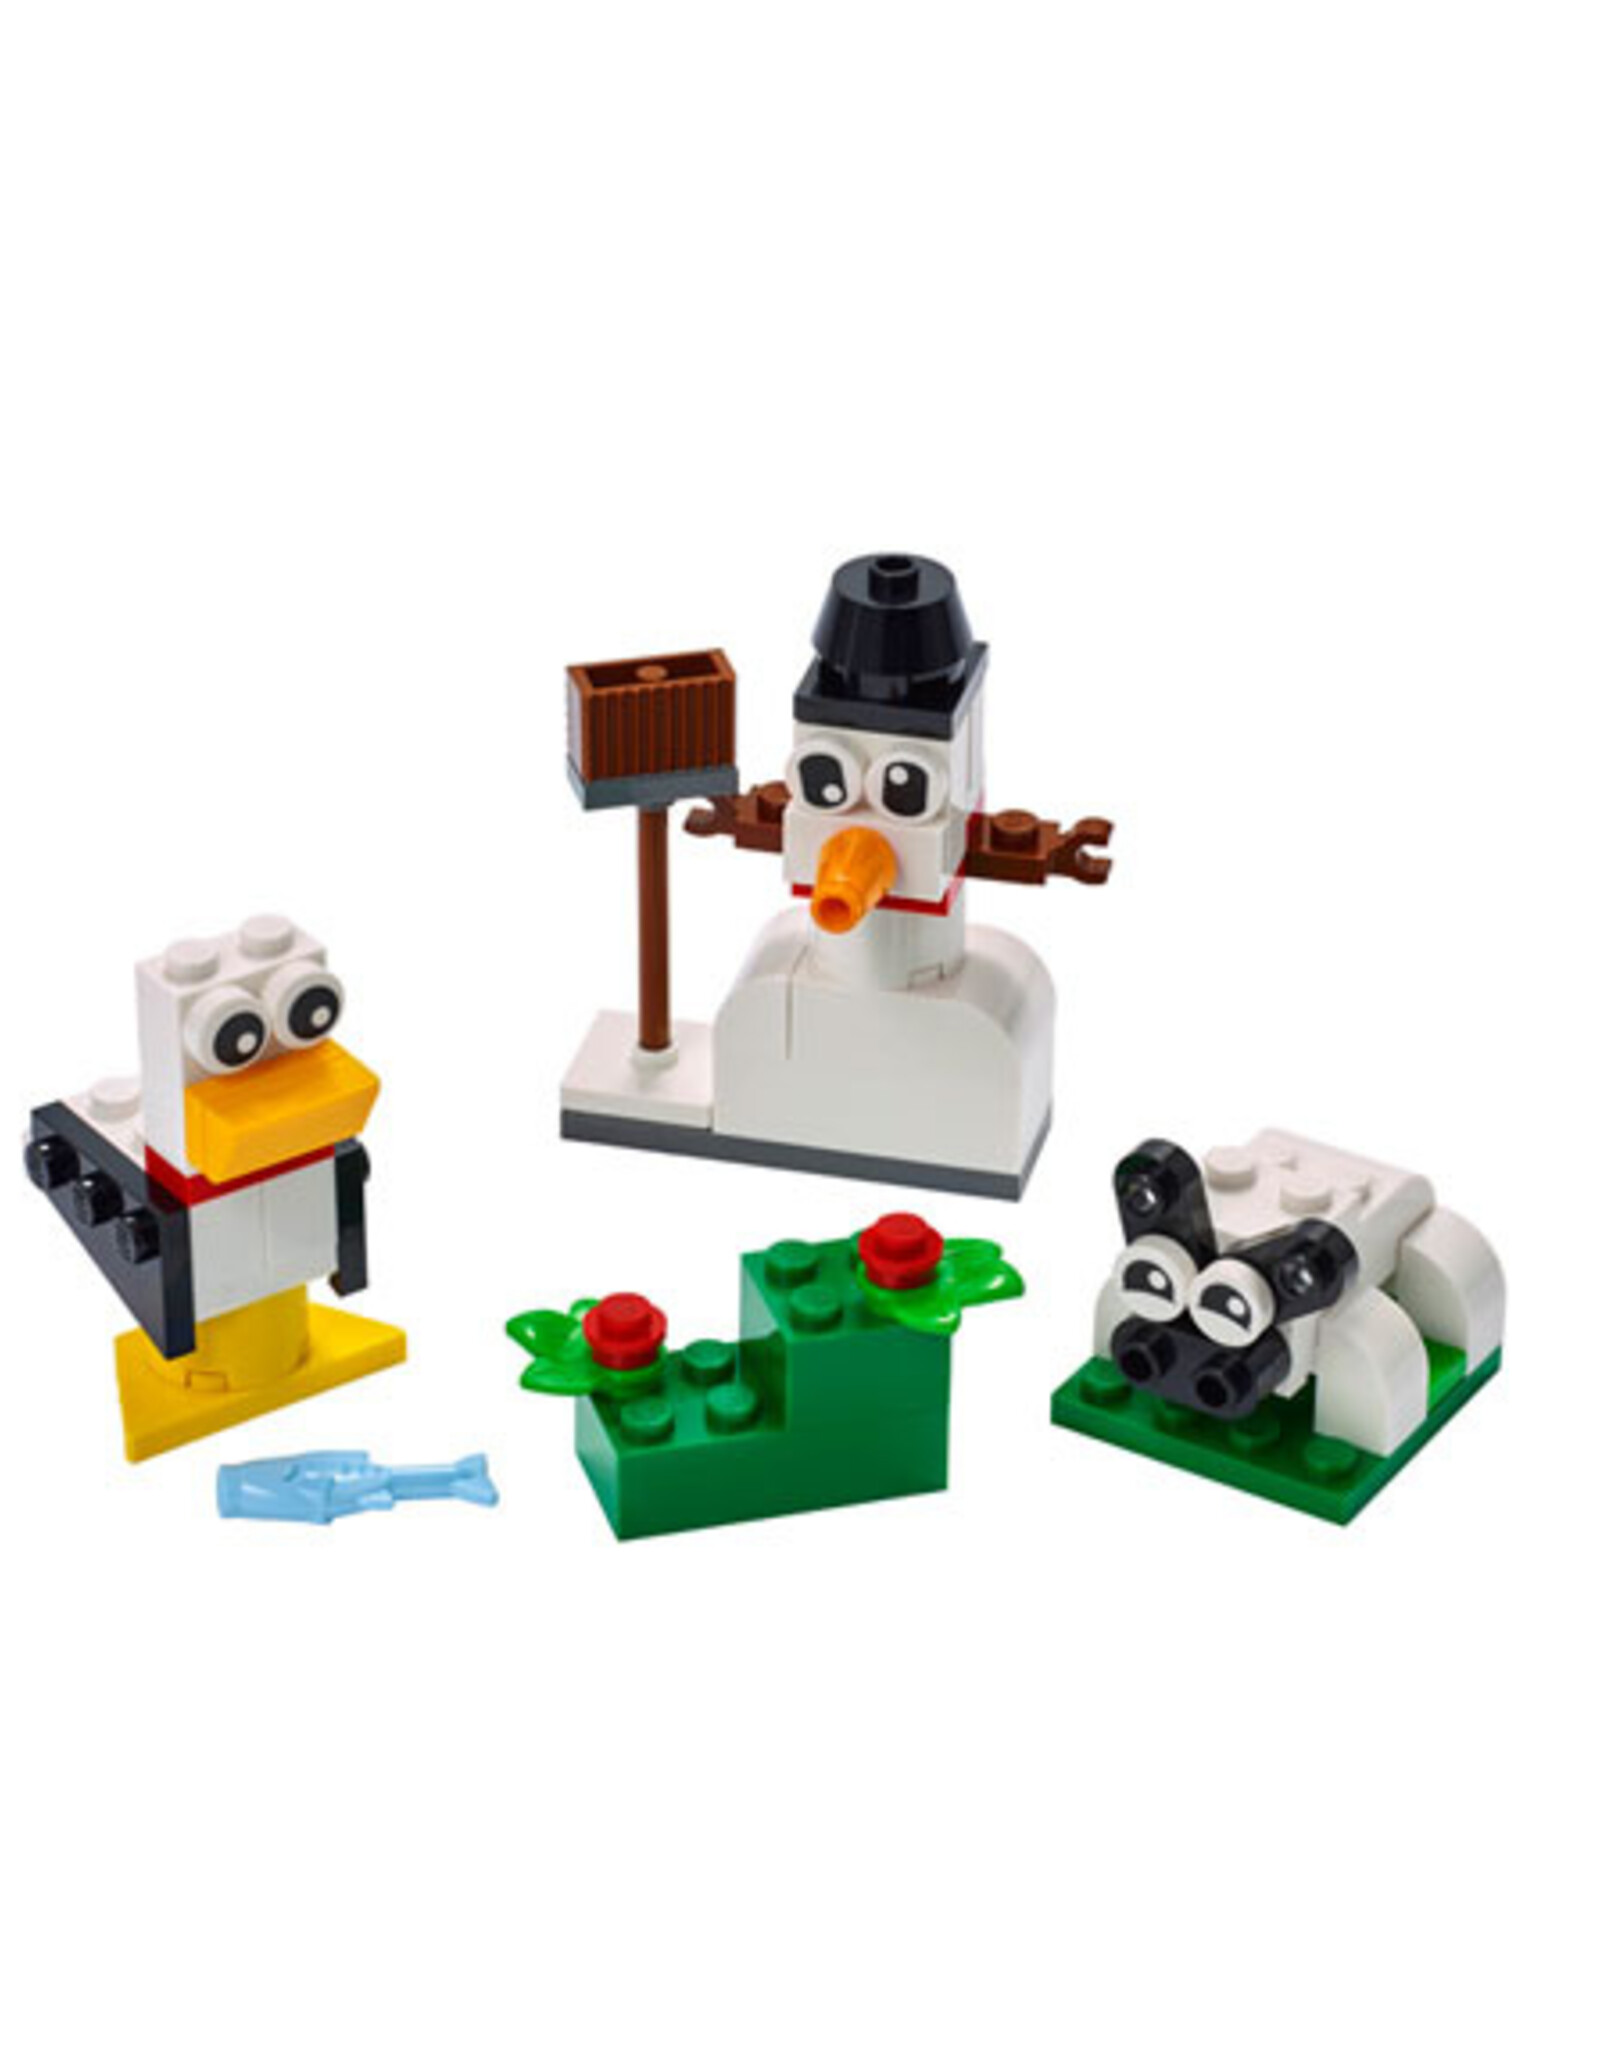 LEGO LEGO 11012 Creative White Bricks CREATOR